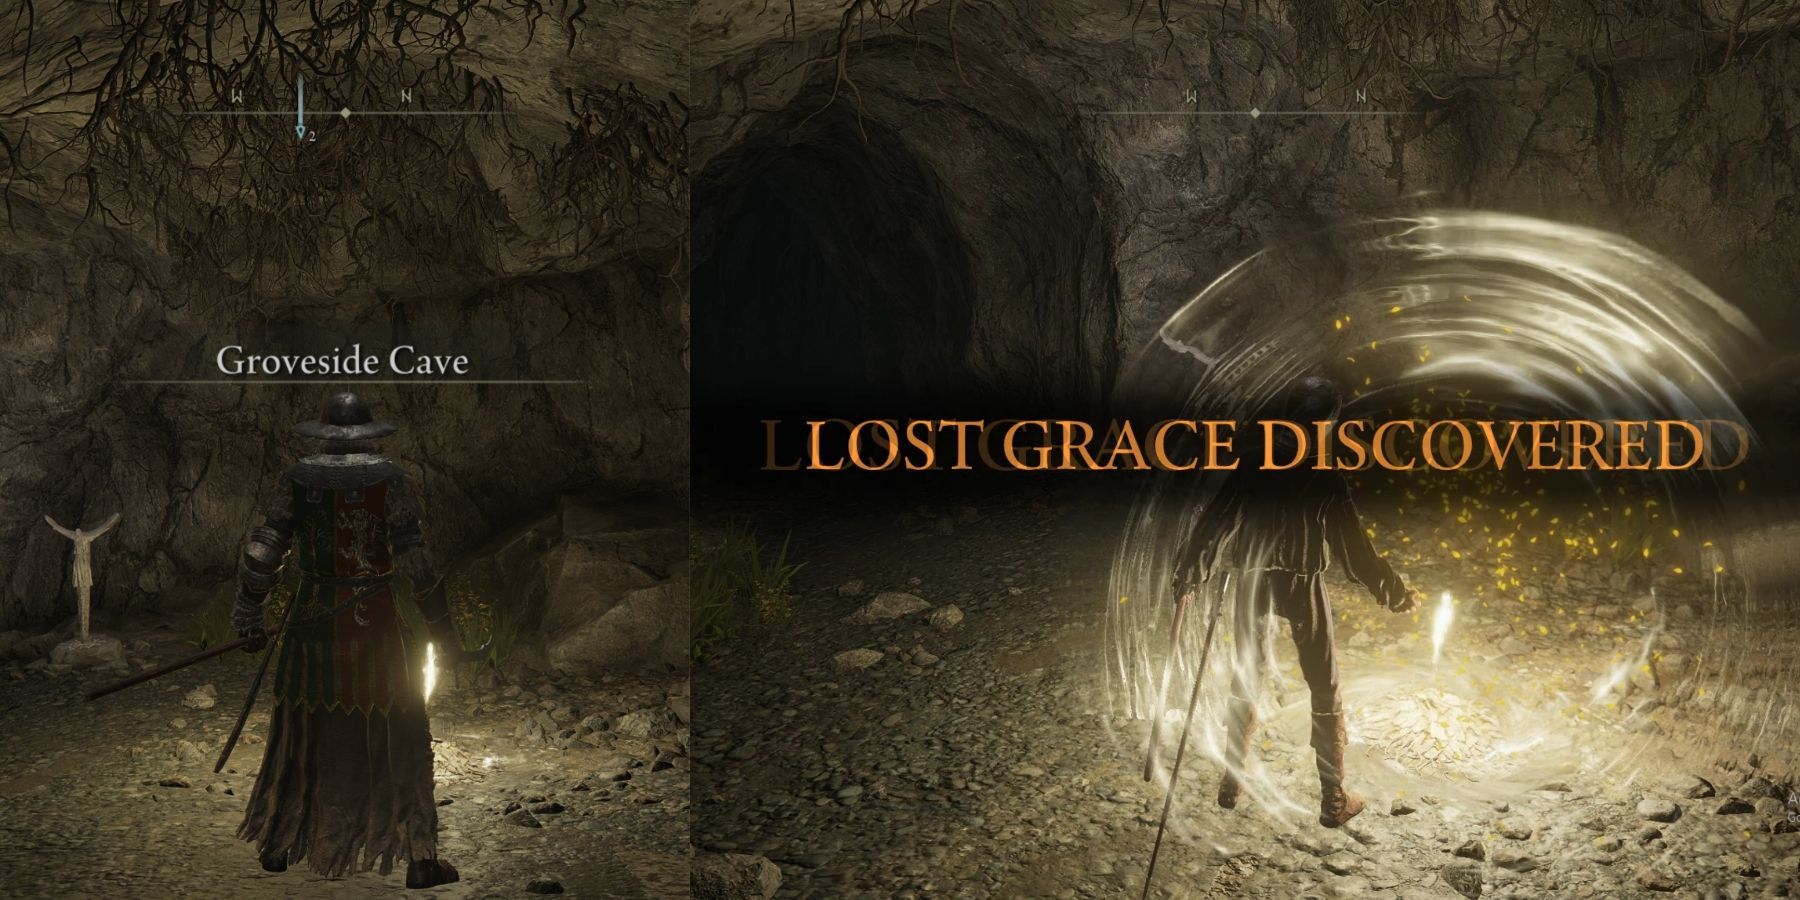 site of lost grace in groveside cave in elden ring